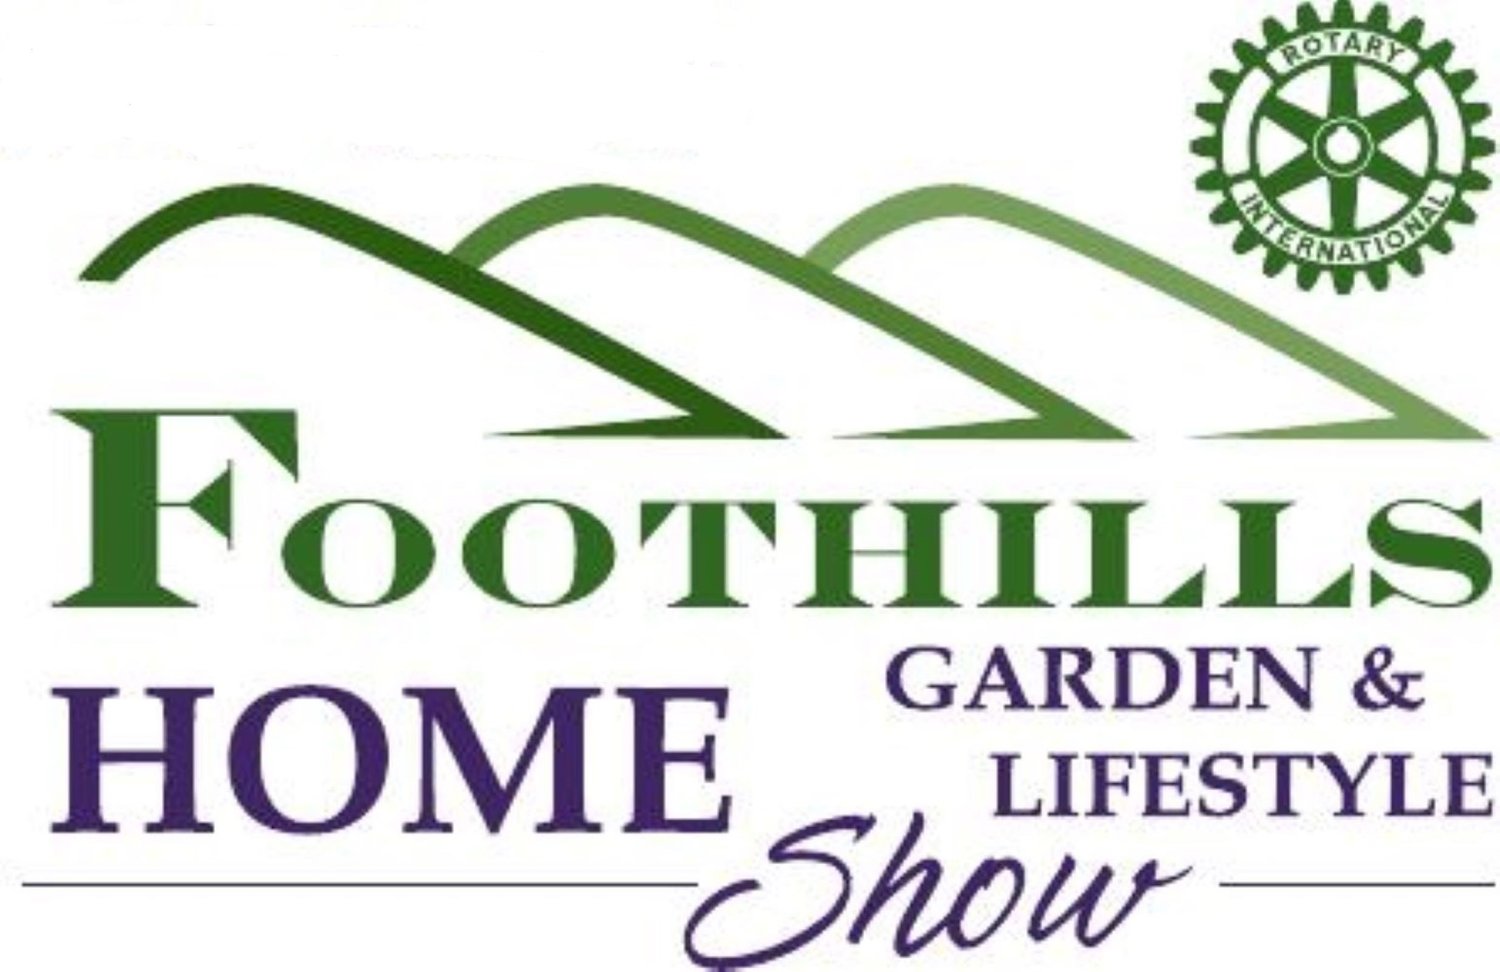 Foothills Home, Garden & Lifestyle Show